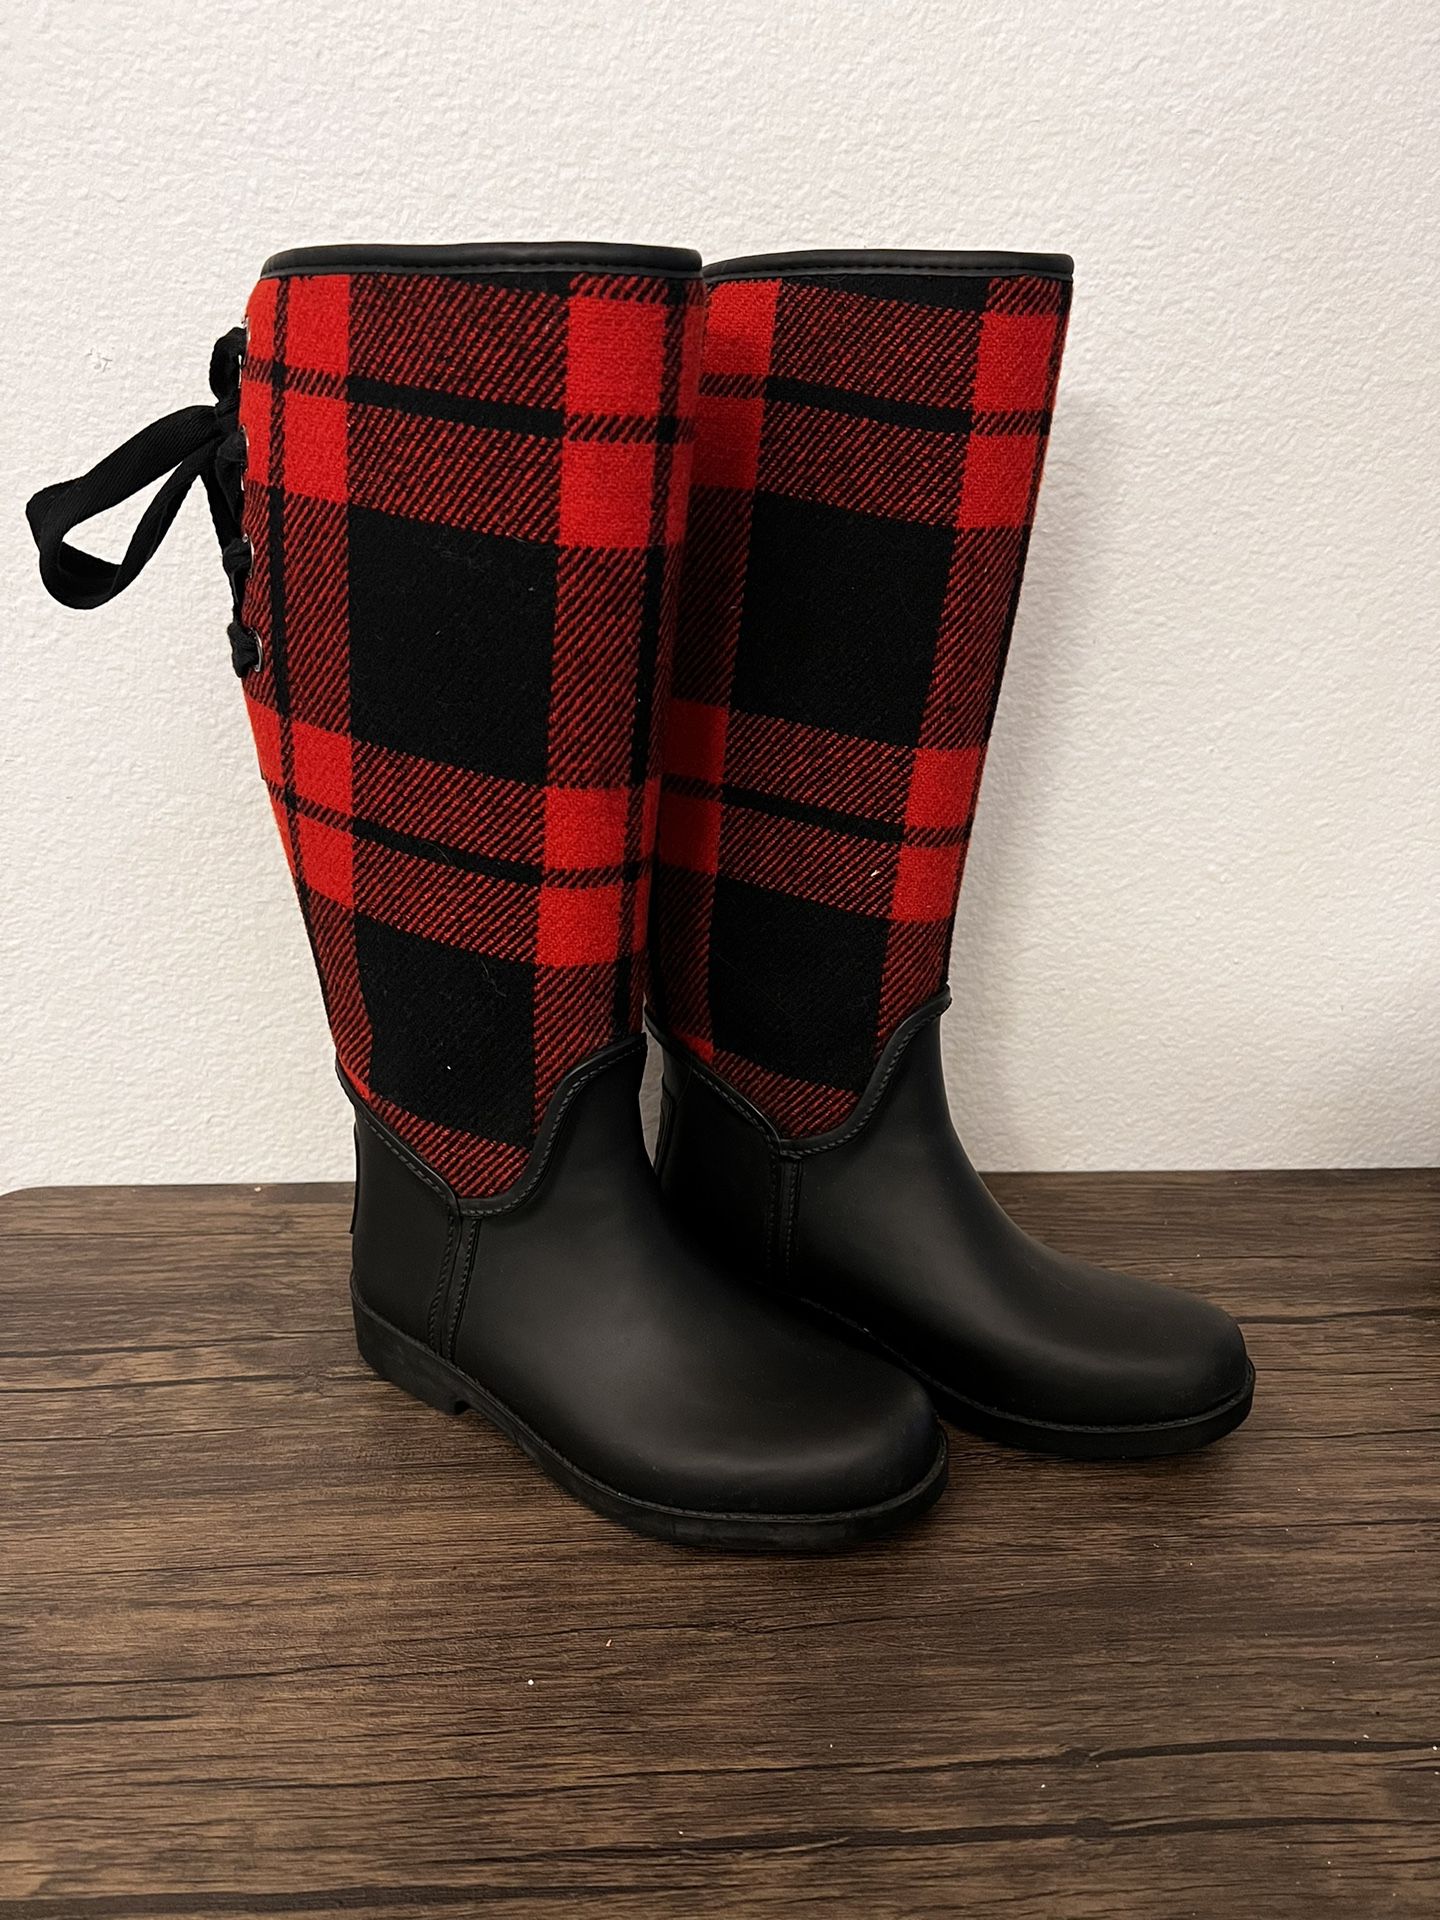 Coach Tristee Rain Boots, Red/Black Buffalo Plaid, Women’s Size 6B Fleece-Lined